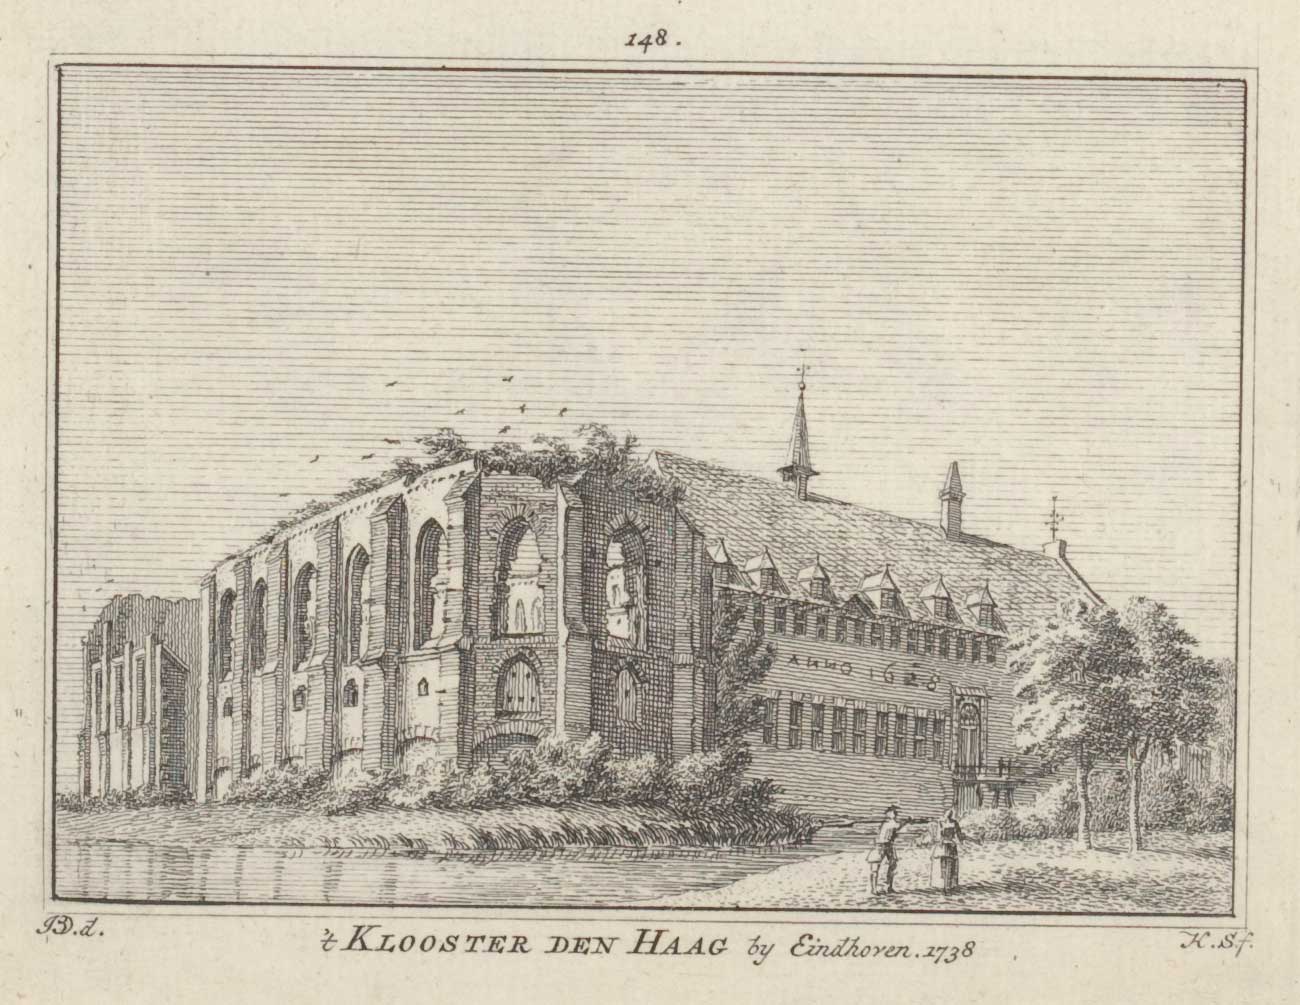 Klooster Mariënhage in 1738 (BHIC, 343-001353)